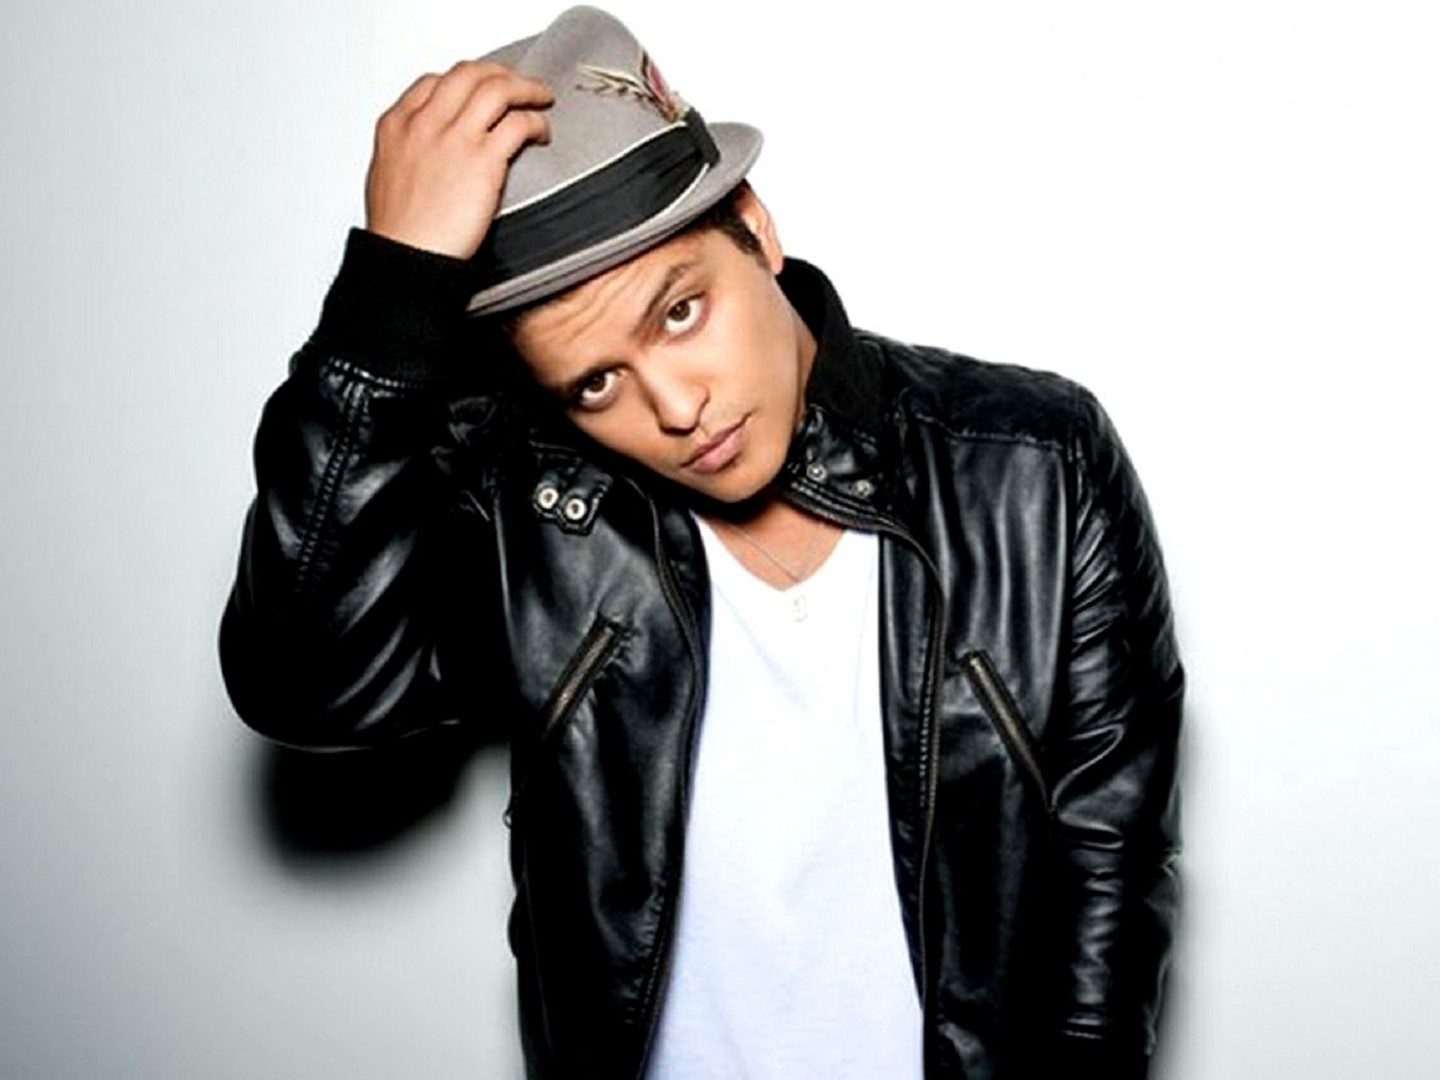 Bruno Mars: As melhores músicas - playlist by Miguel